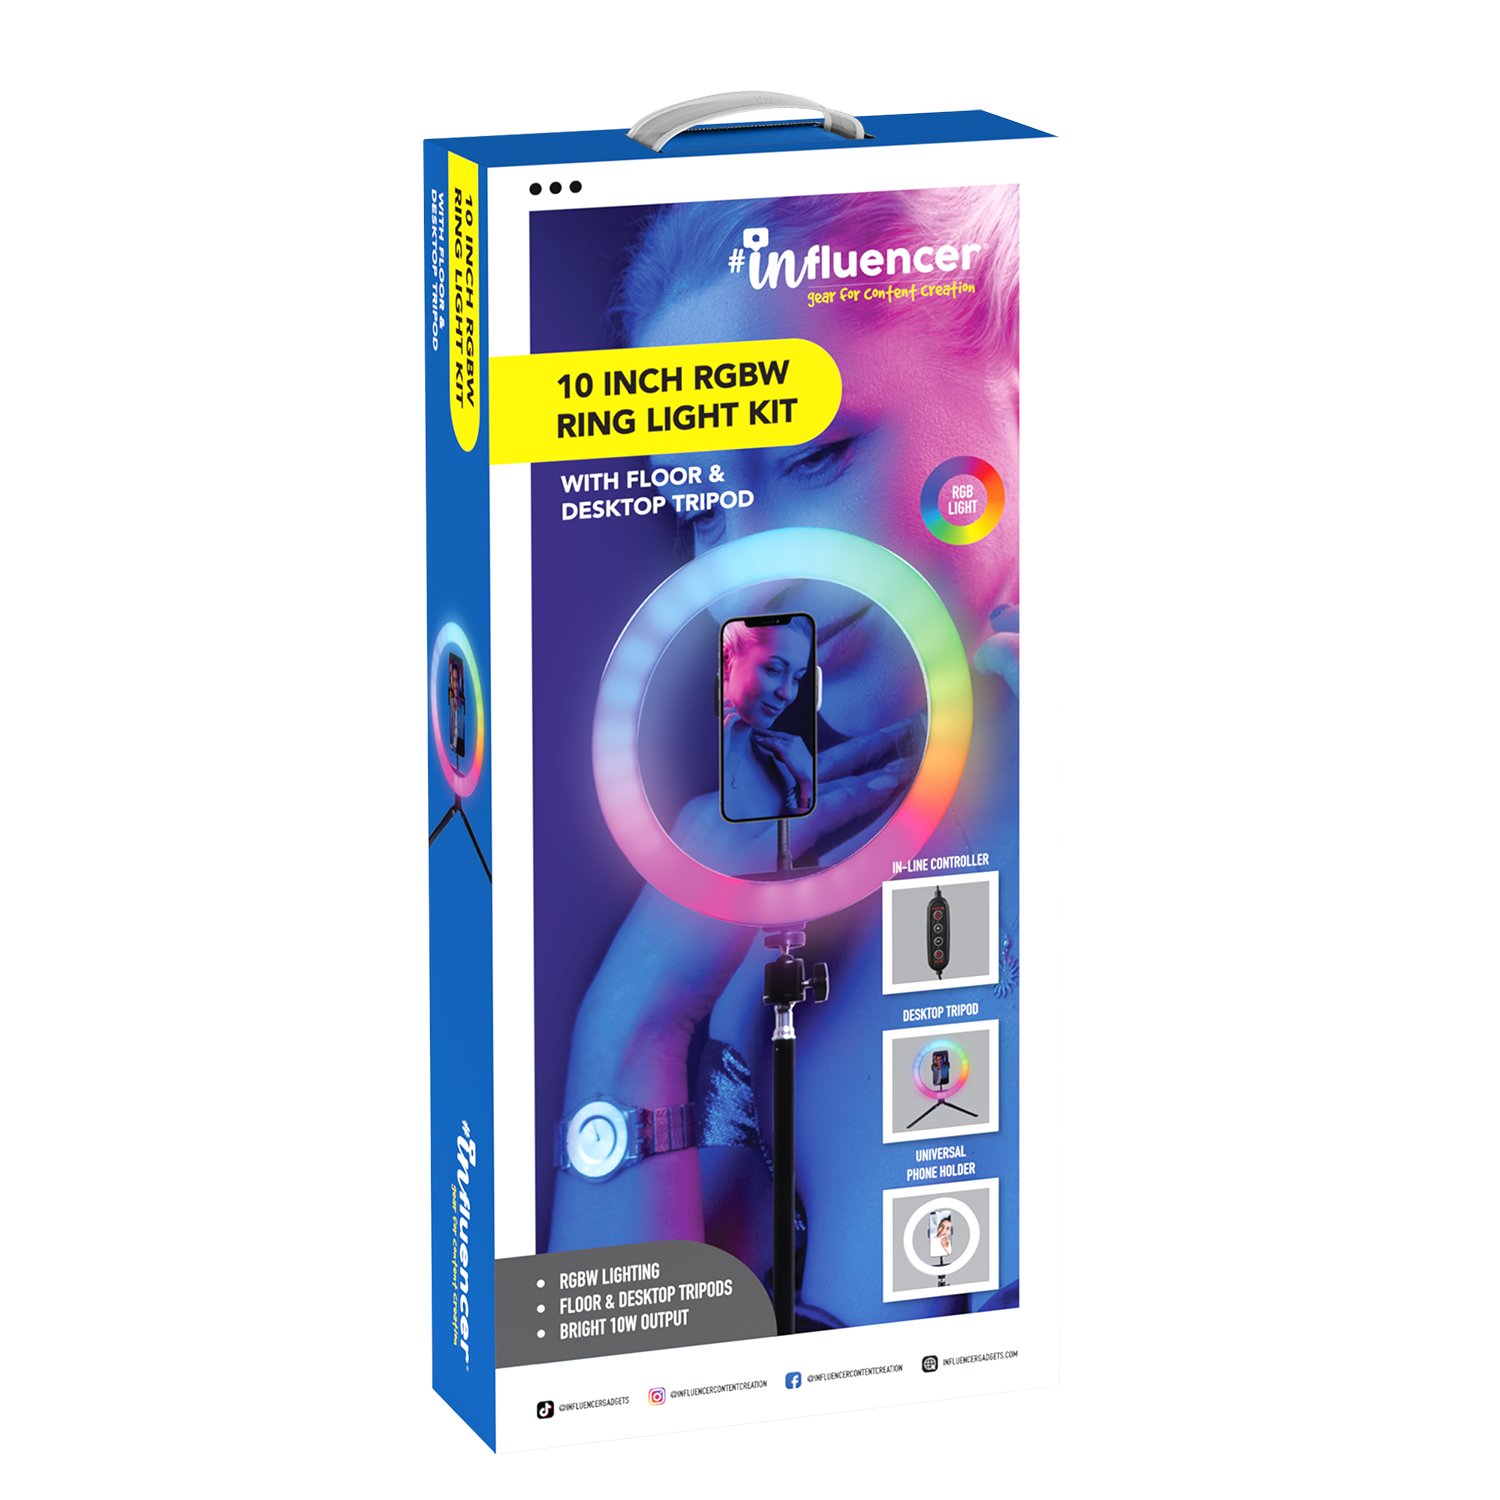 10 Inch RGB Ring Light Kit